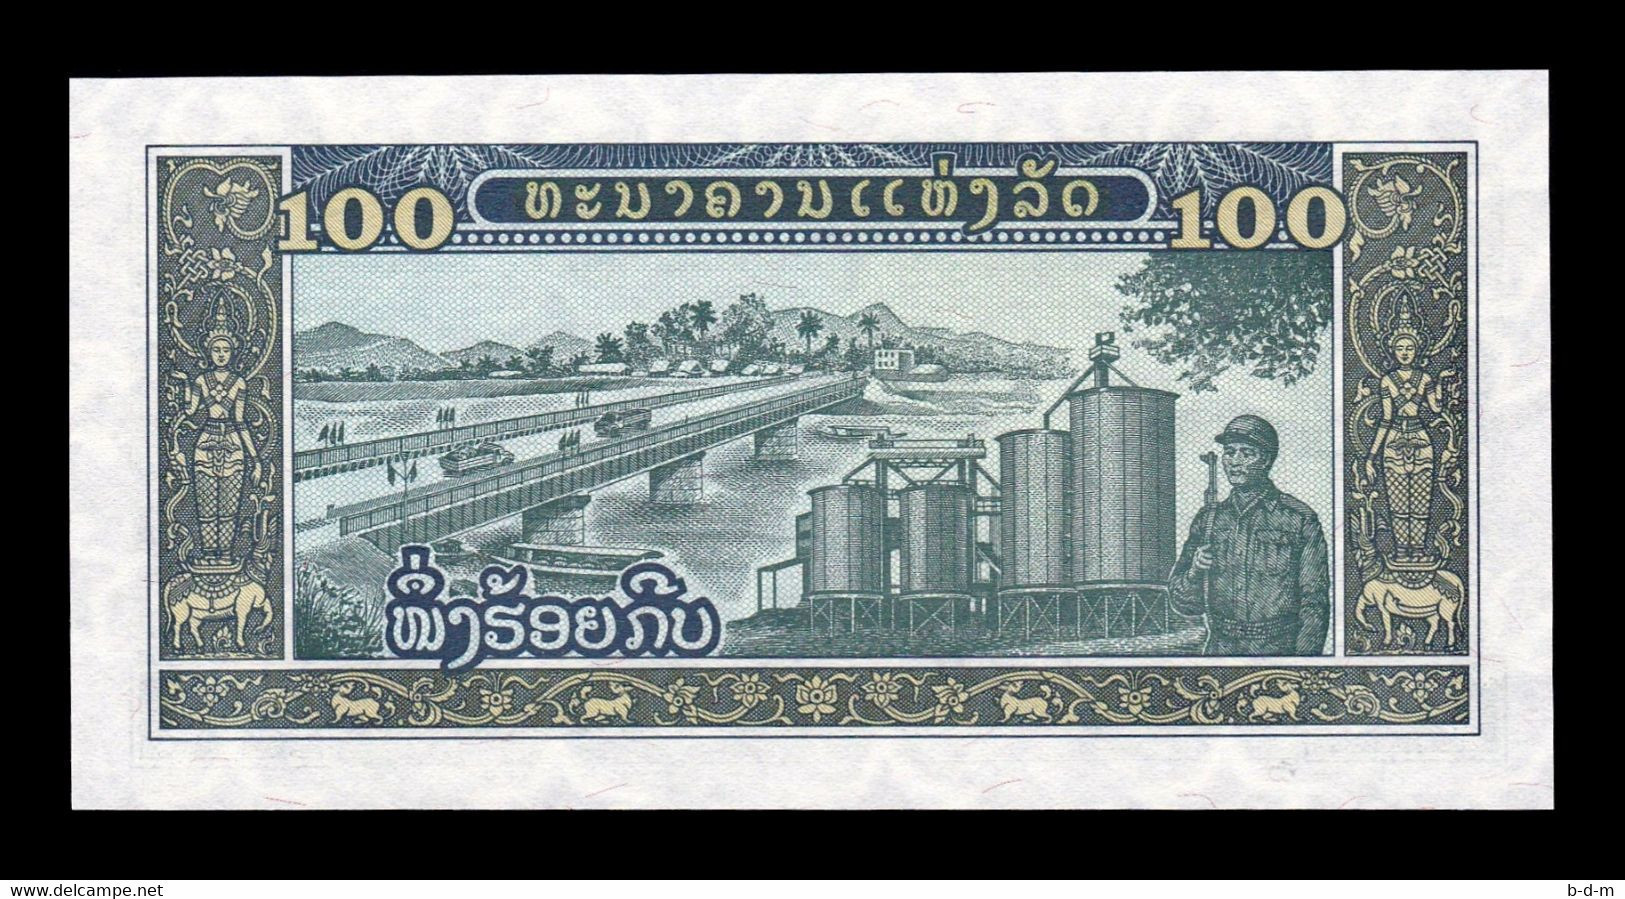 Laos Lao Lot Bundle 100 Banknotes 100 Kip 1979 Pick 30 Sc Unc